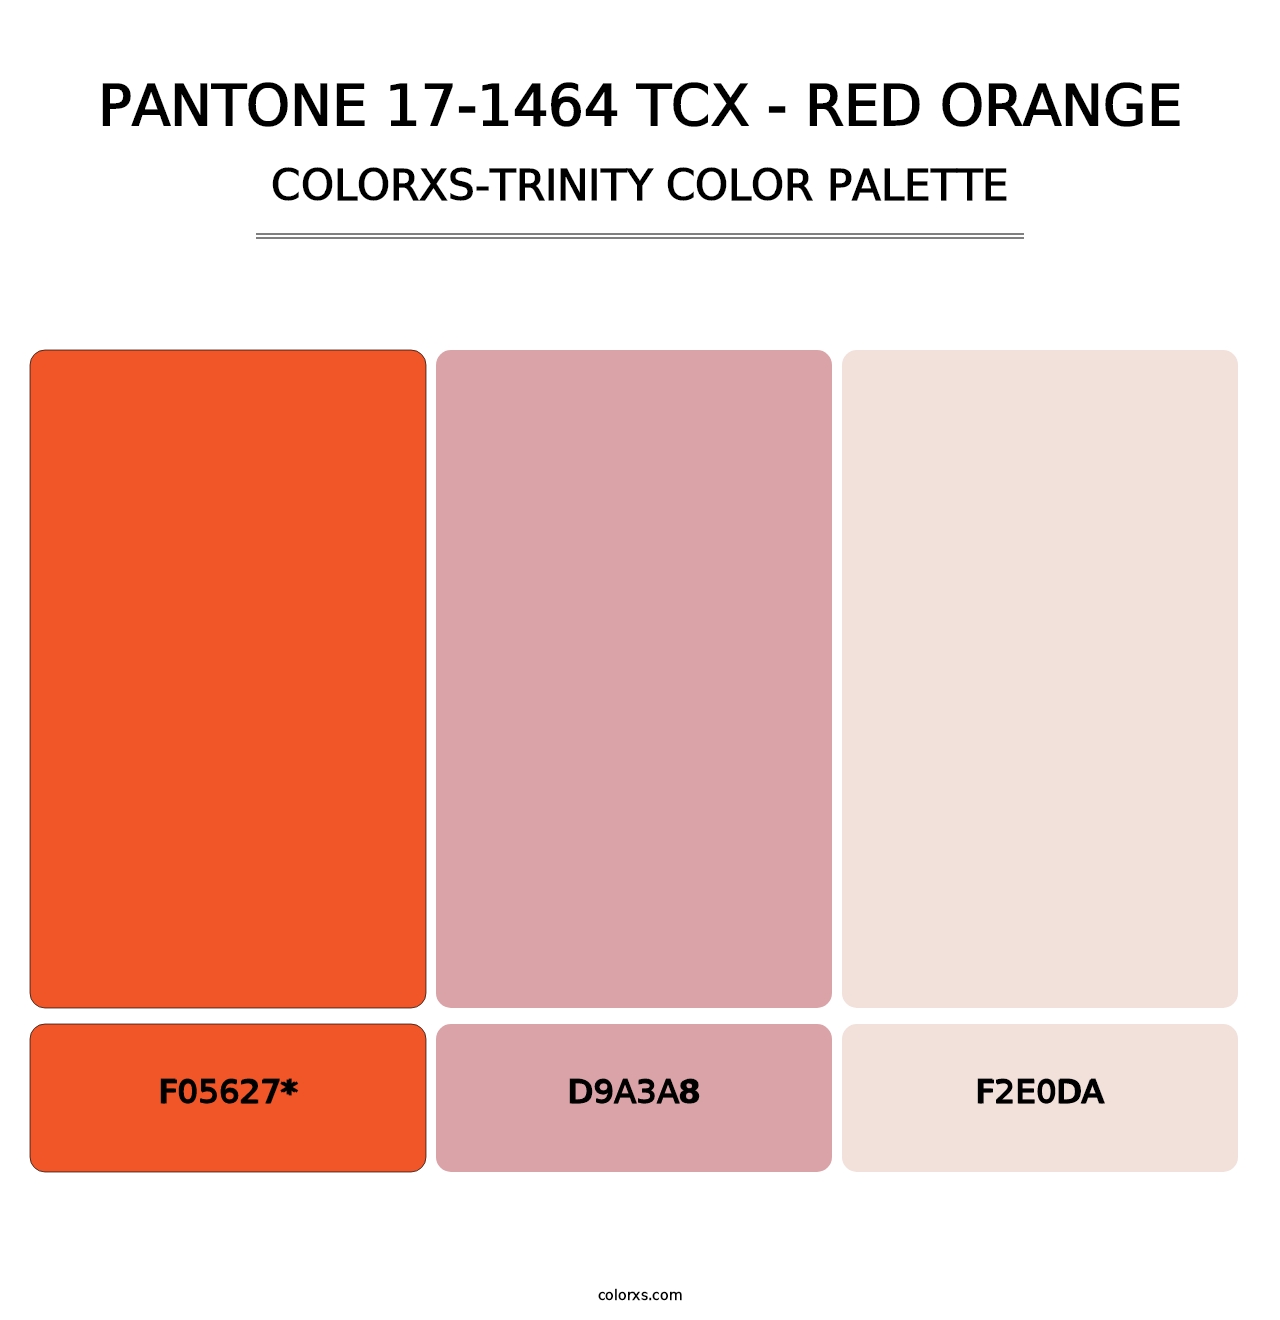 PANTONE 17-1464 TCX - Red Orange - Colorxs Trinity Palette